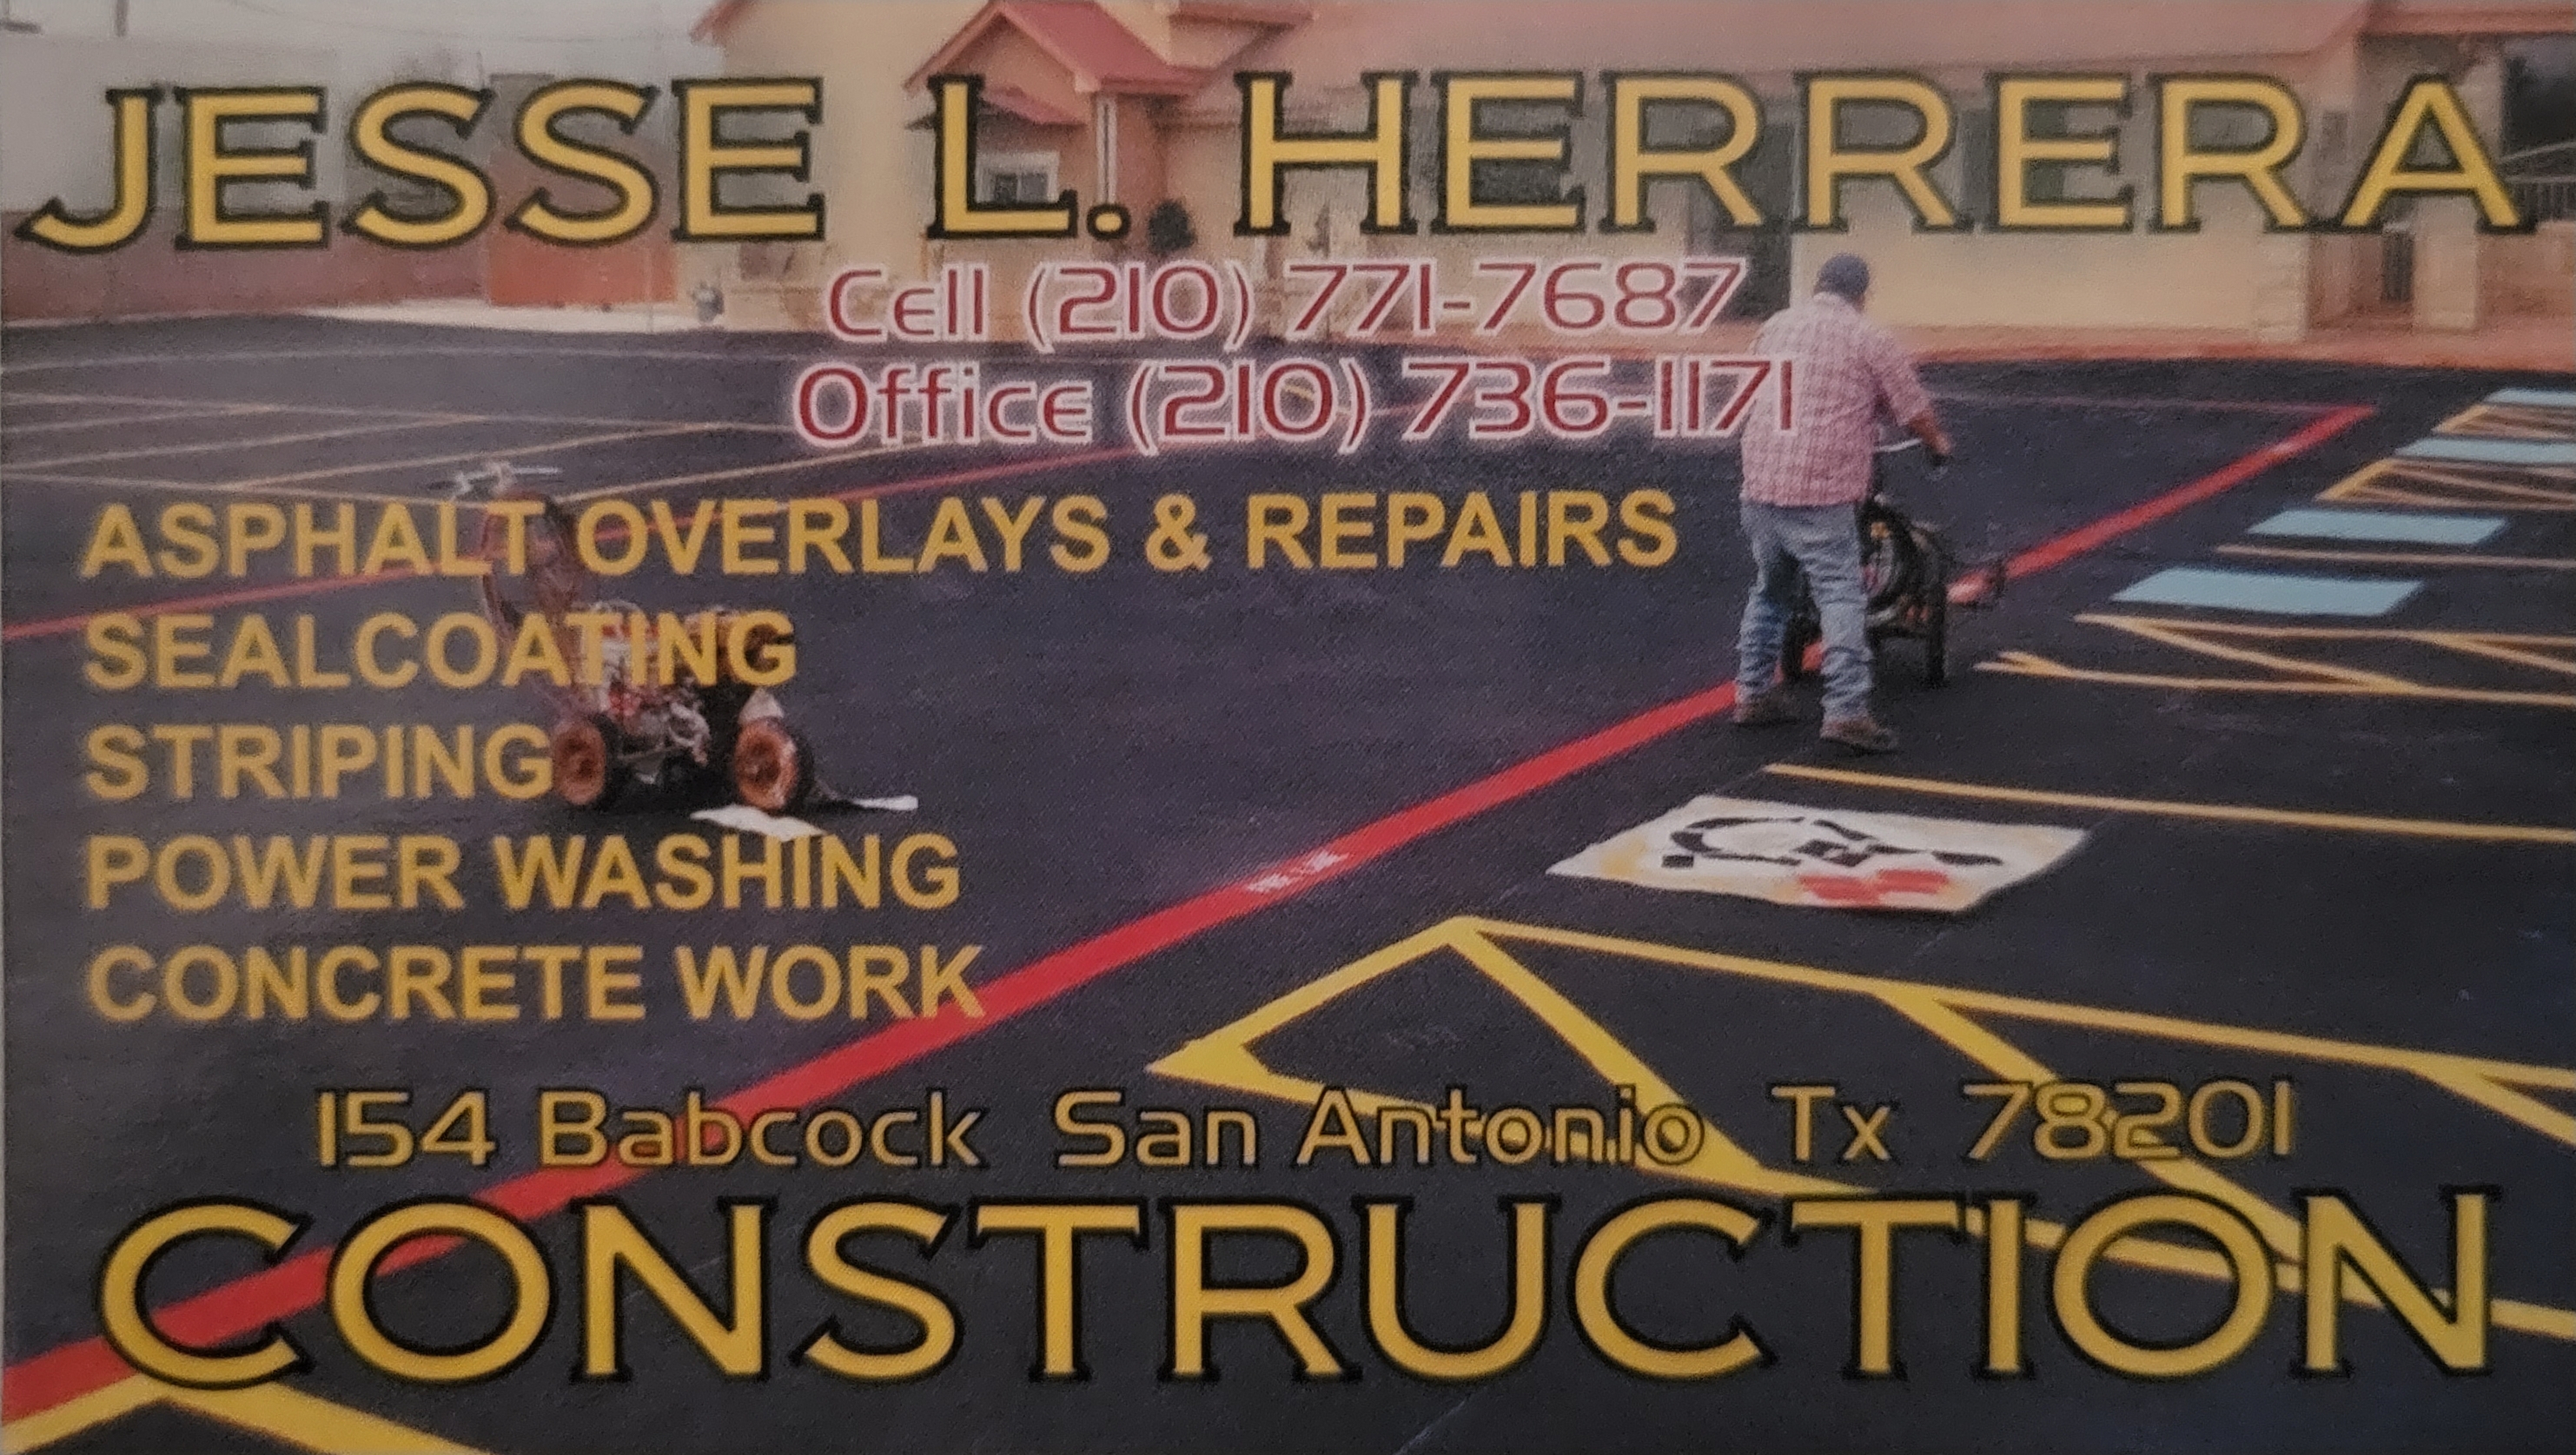 Jesse L. Herrera Construction
210-736-1171